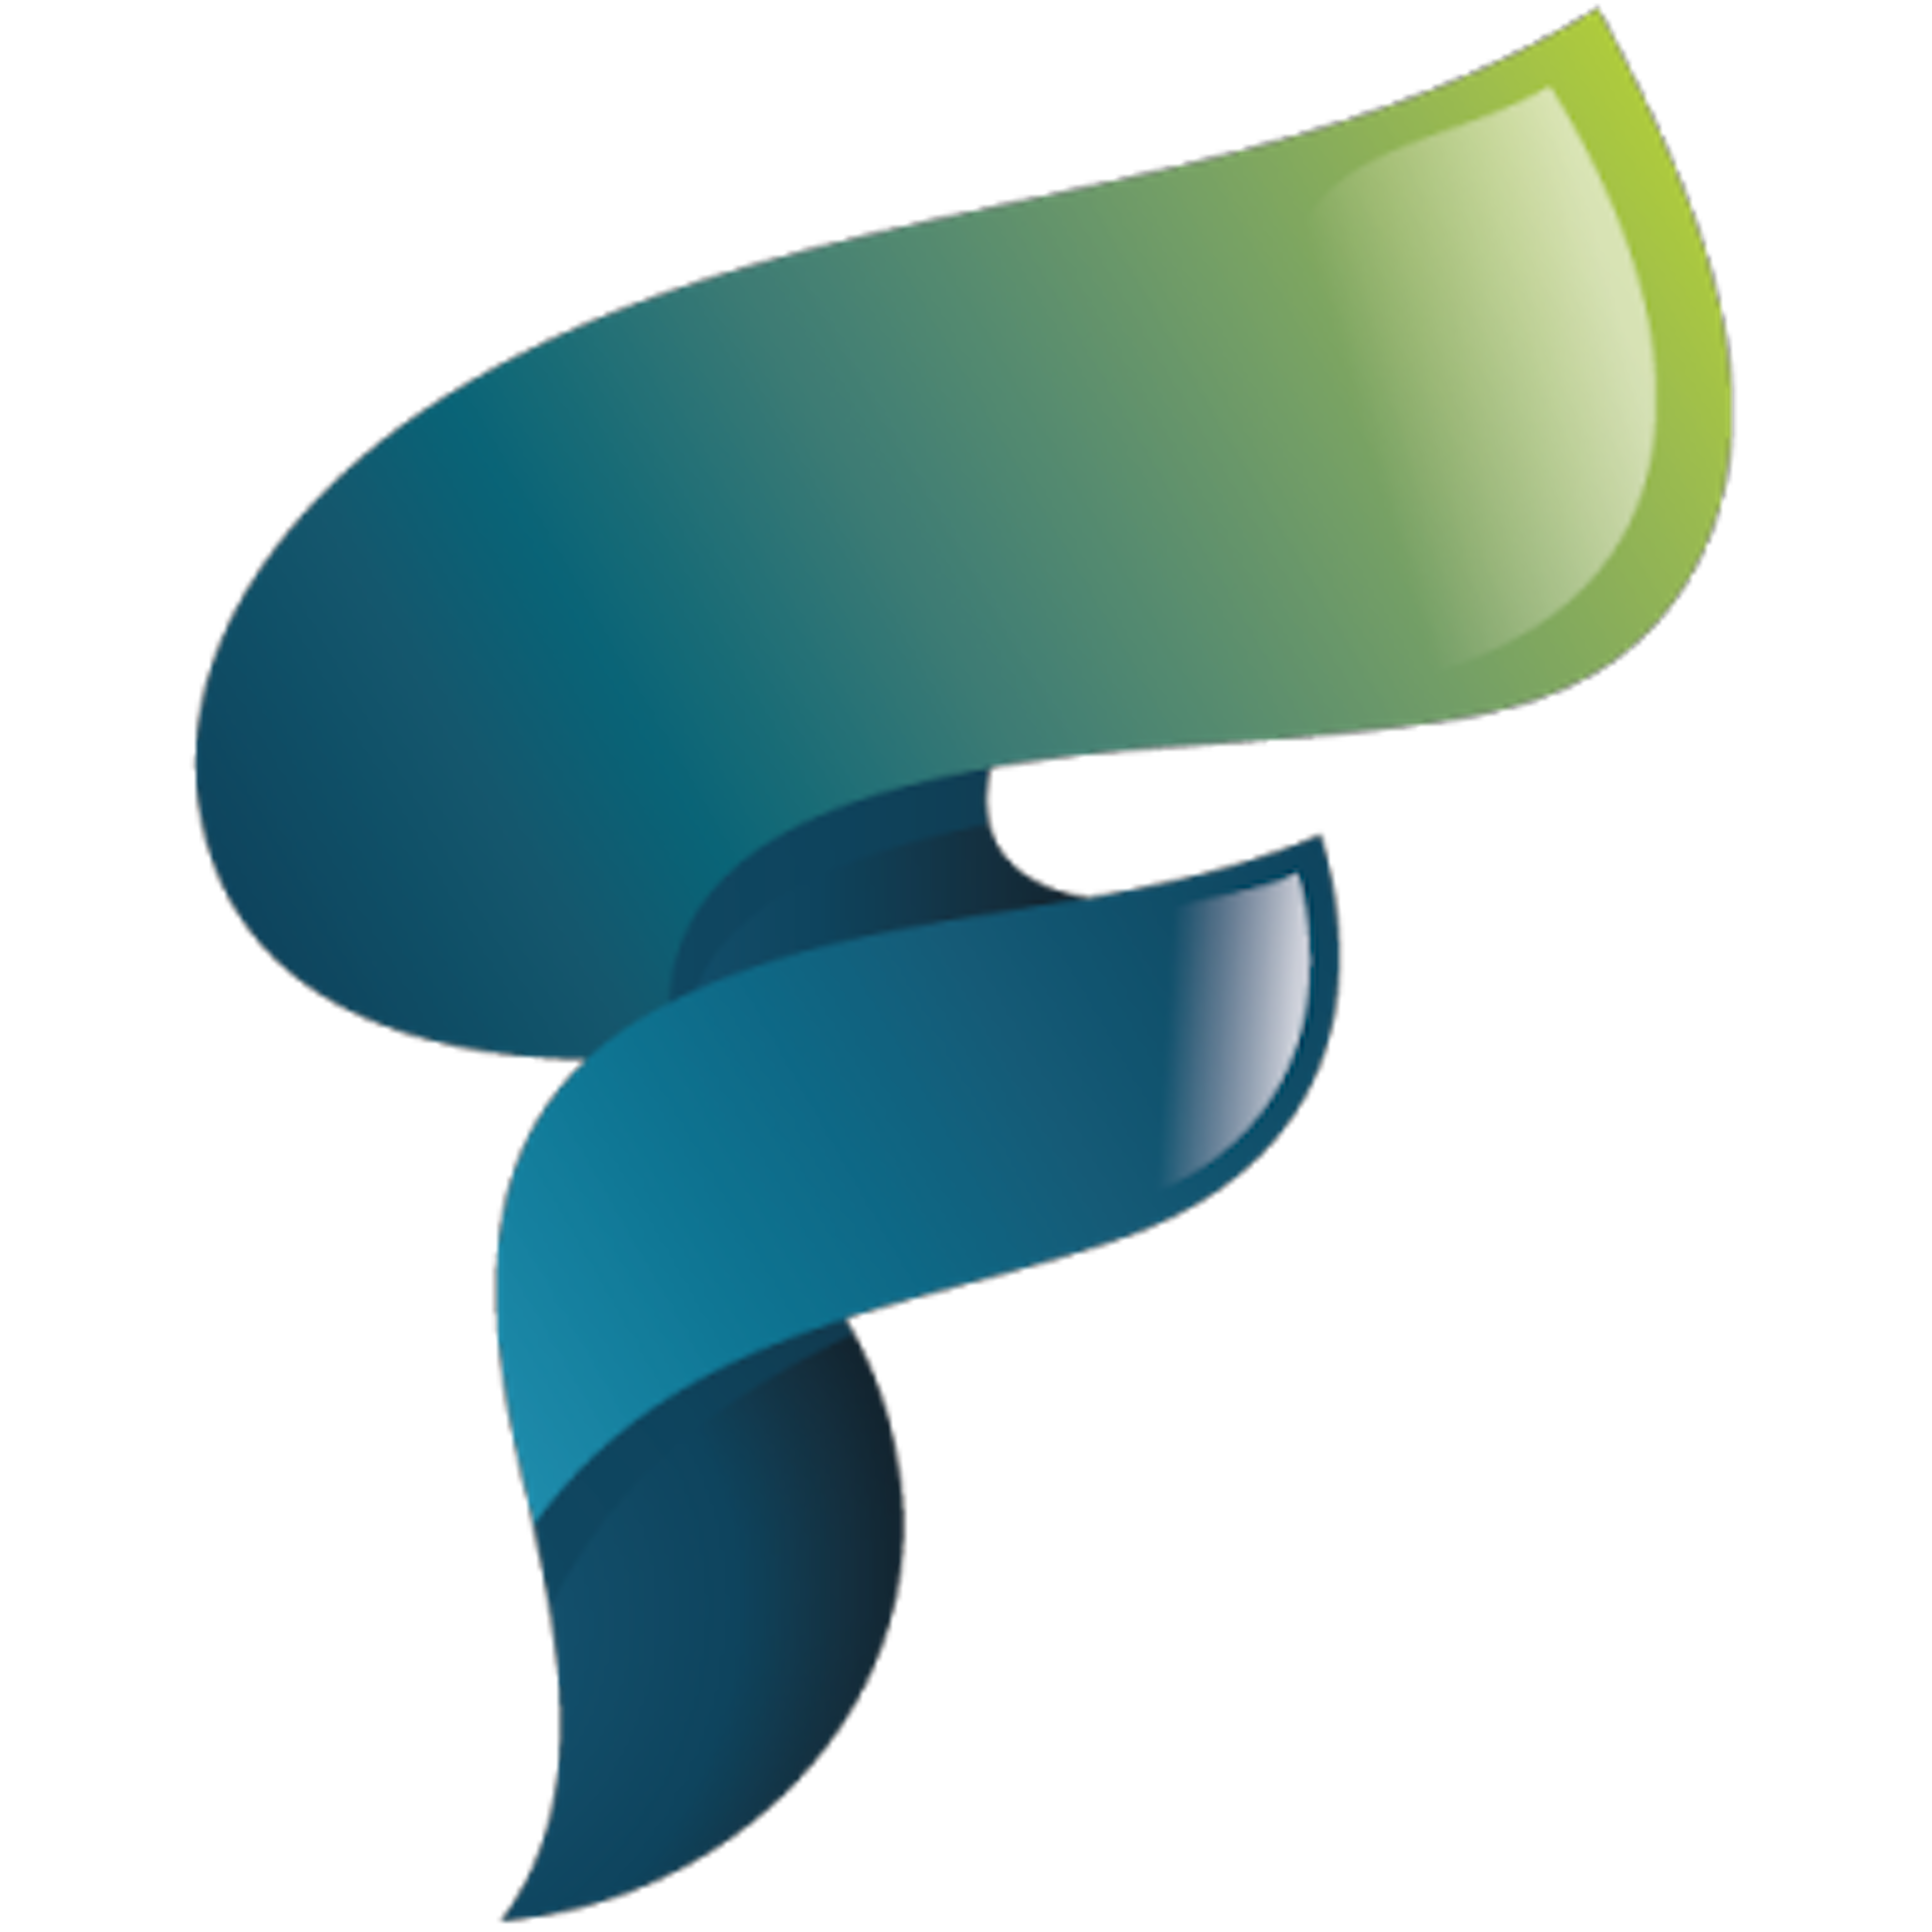 Fluida Logo